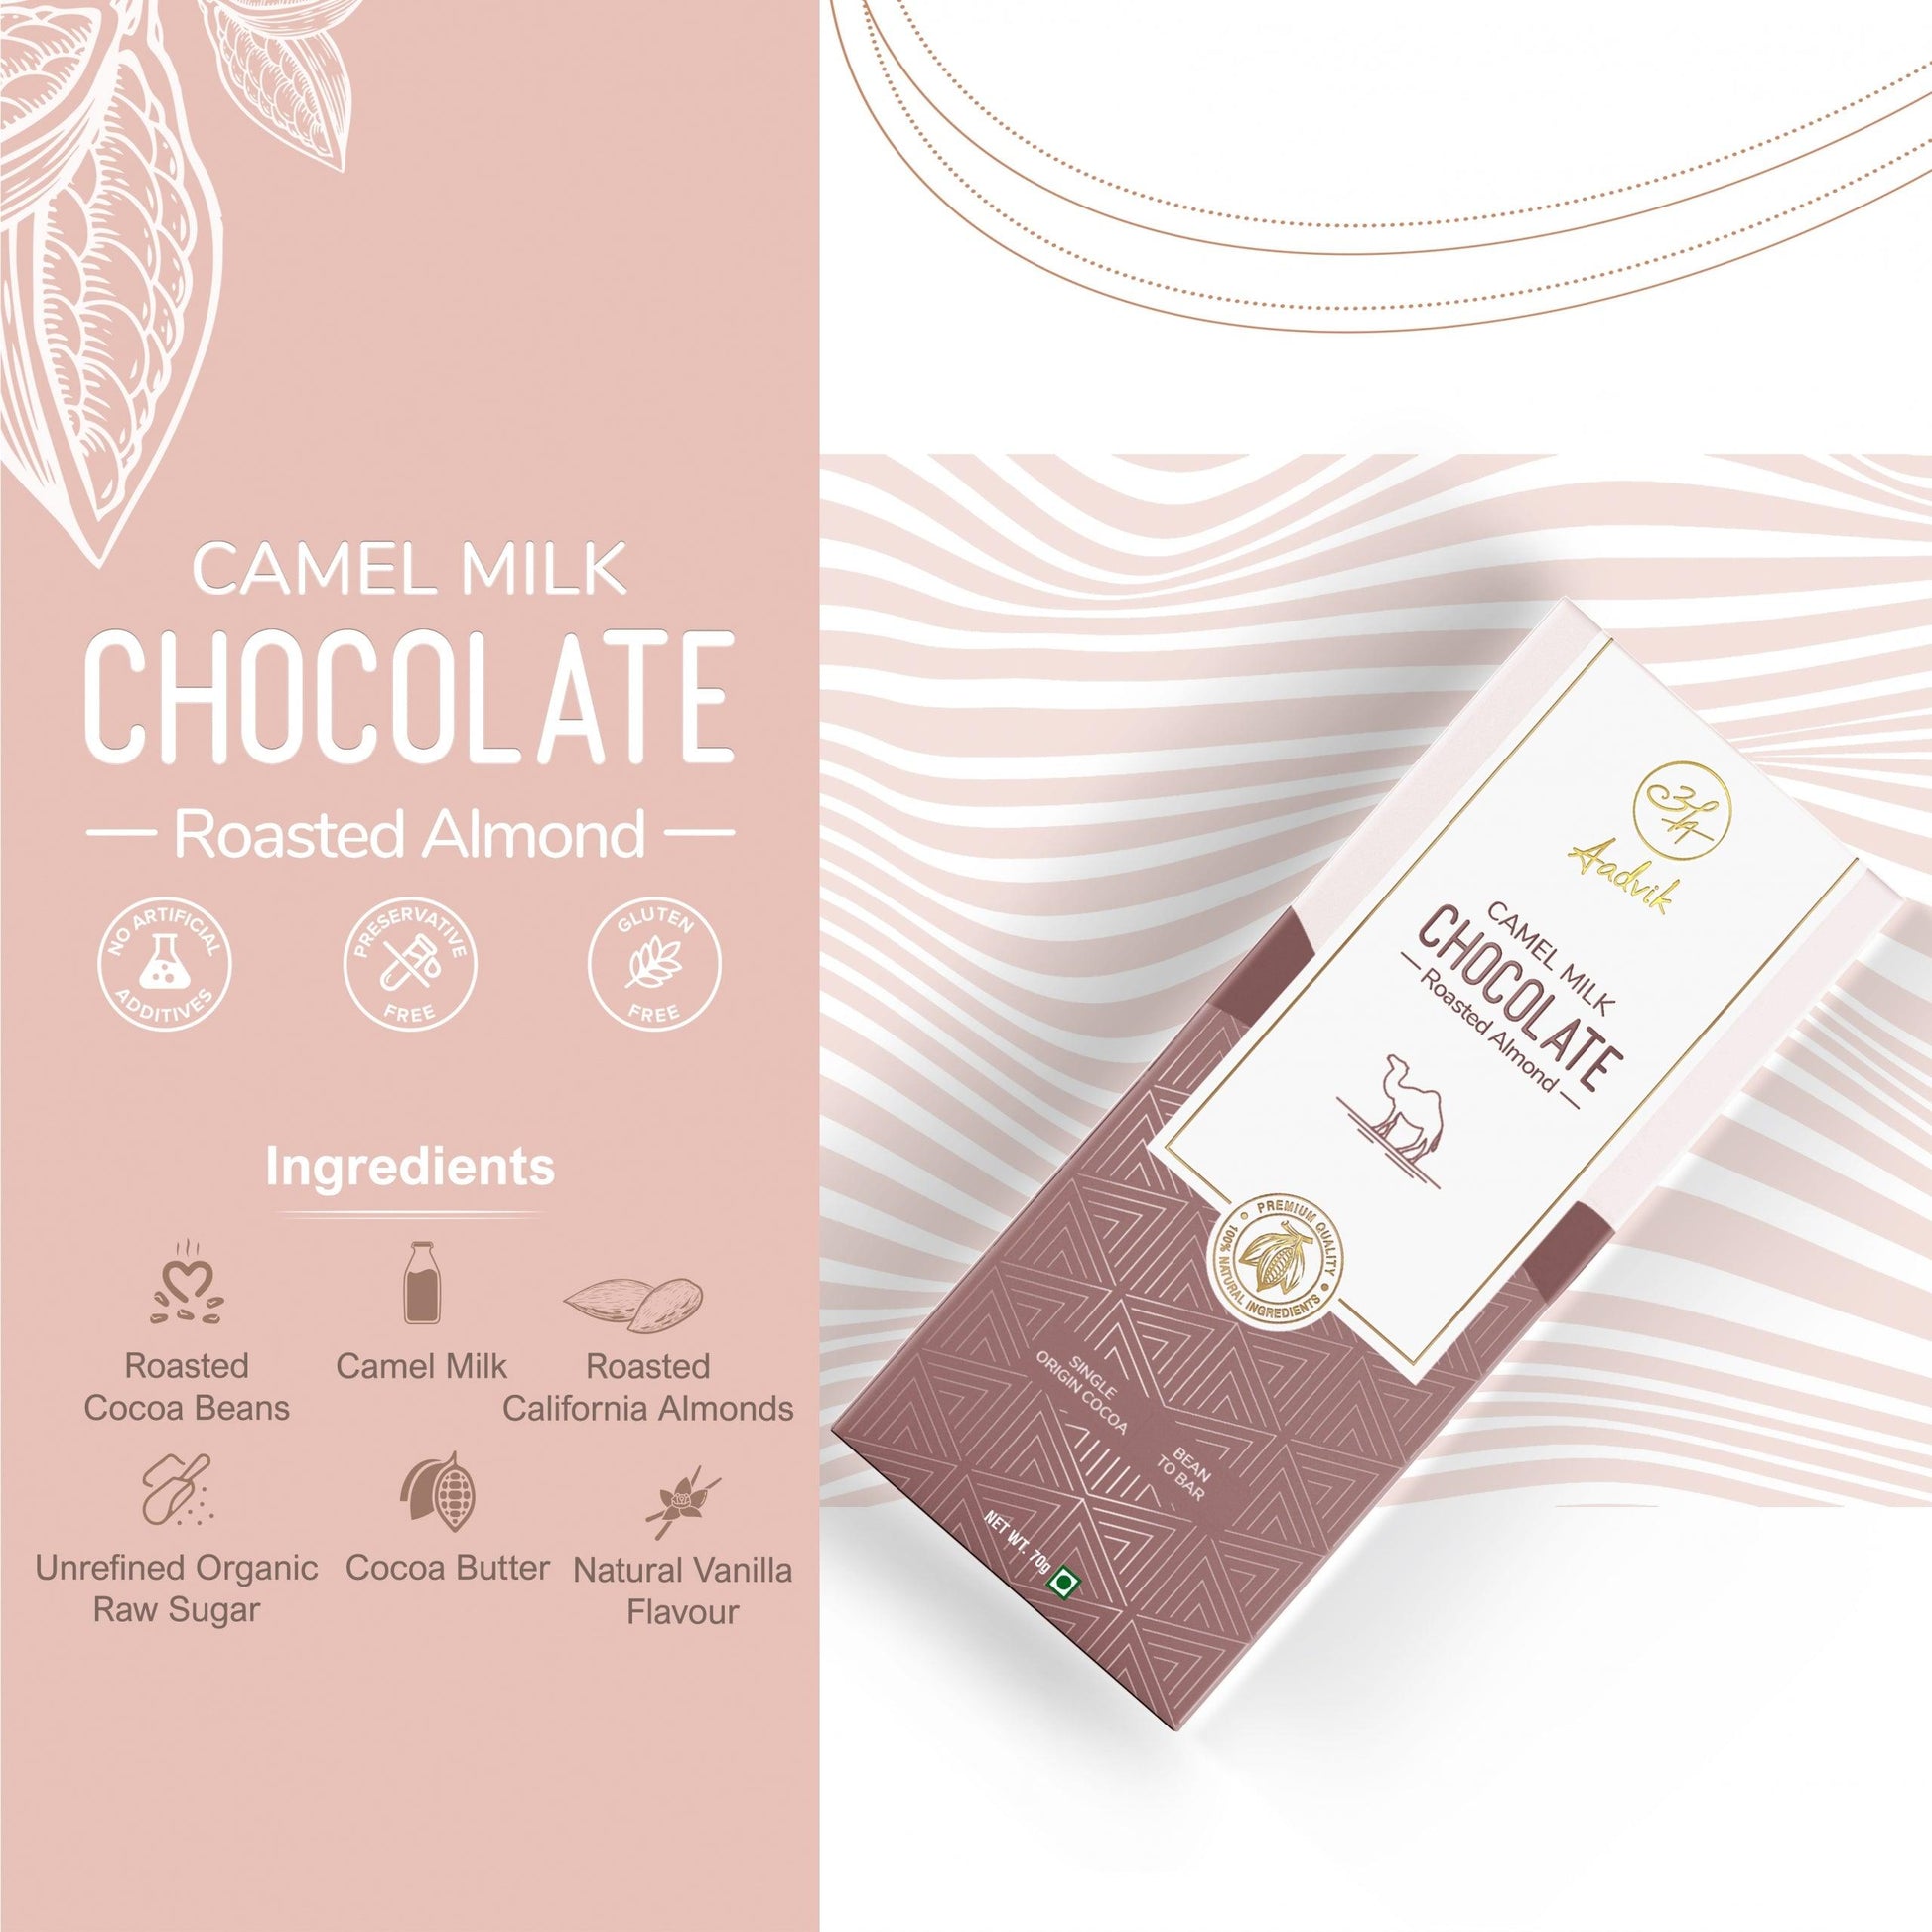 Camel Milk Chocolate । A Shark Tank Product | Roasted Almond । 70g - Aadvik Foods